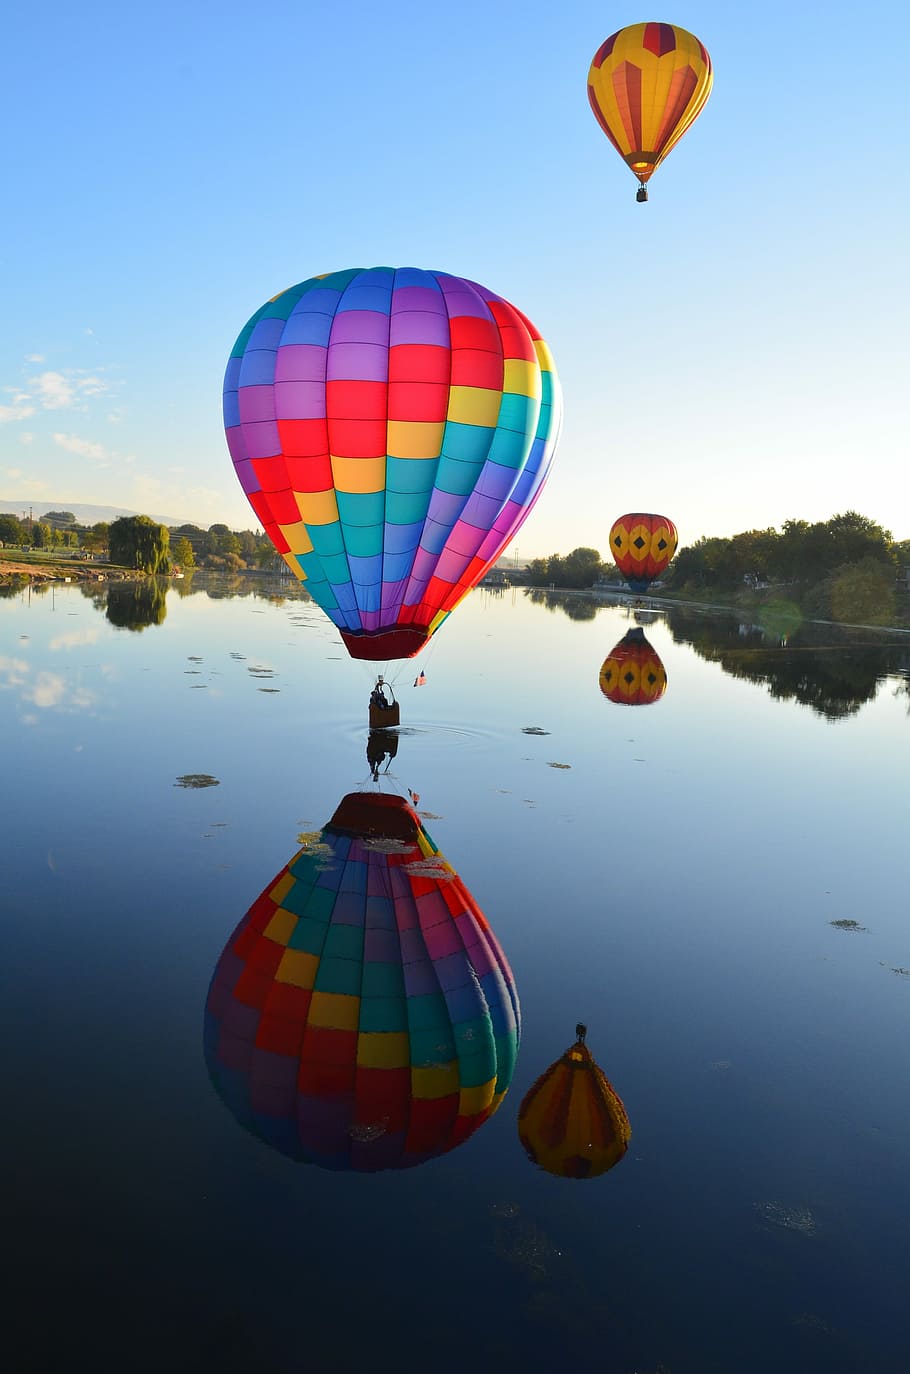 Hot Air Balloons, Colorful, balloon, flight, fly, float, transportation, recreation, flying, ballooning